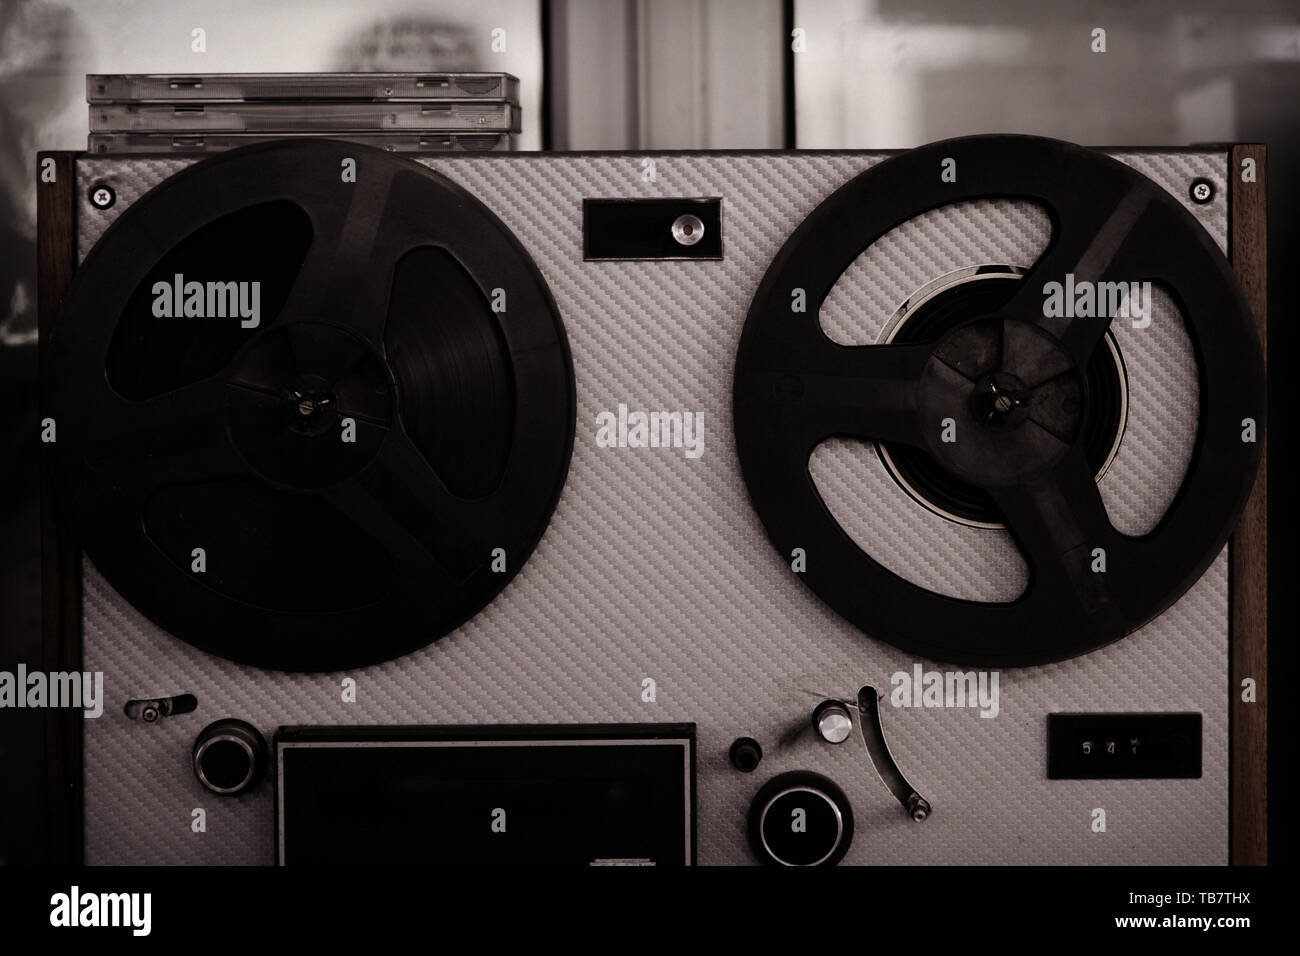 https://c8.alamy.com/comp/TB7THX/reel-tape-recorder-old-vintage-portable-reel-to-reel-tube-tape-recorder-TB7THX.jpg